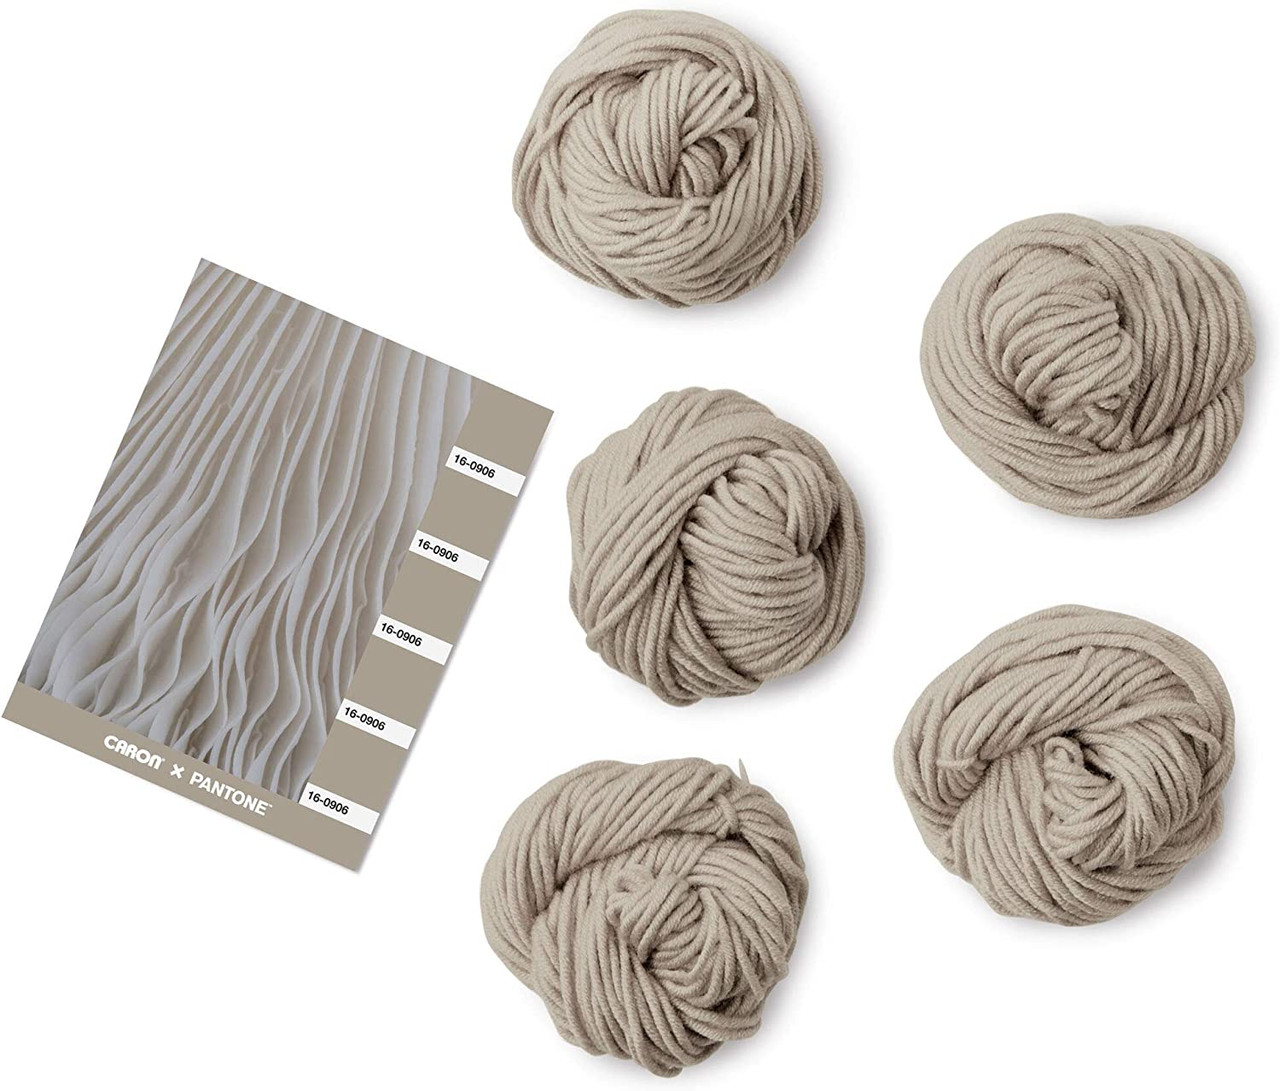 Caron Pantone X Mushroom Greige 5-Color Knitting & Crochet Yarn